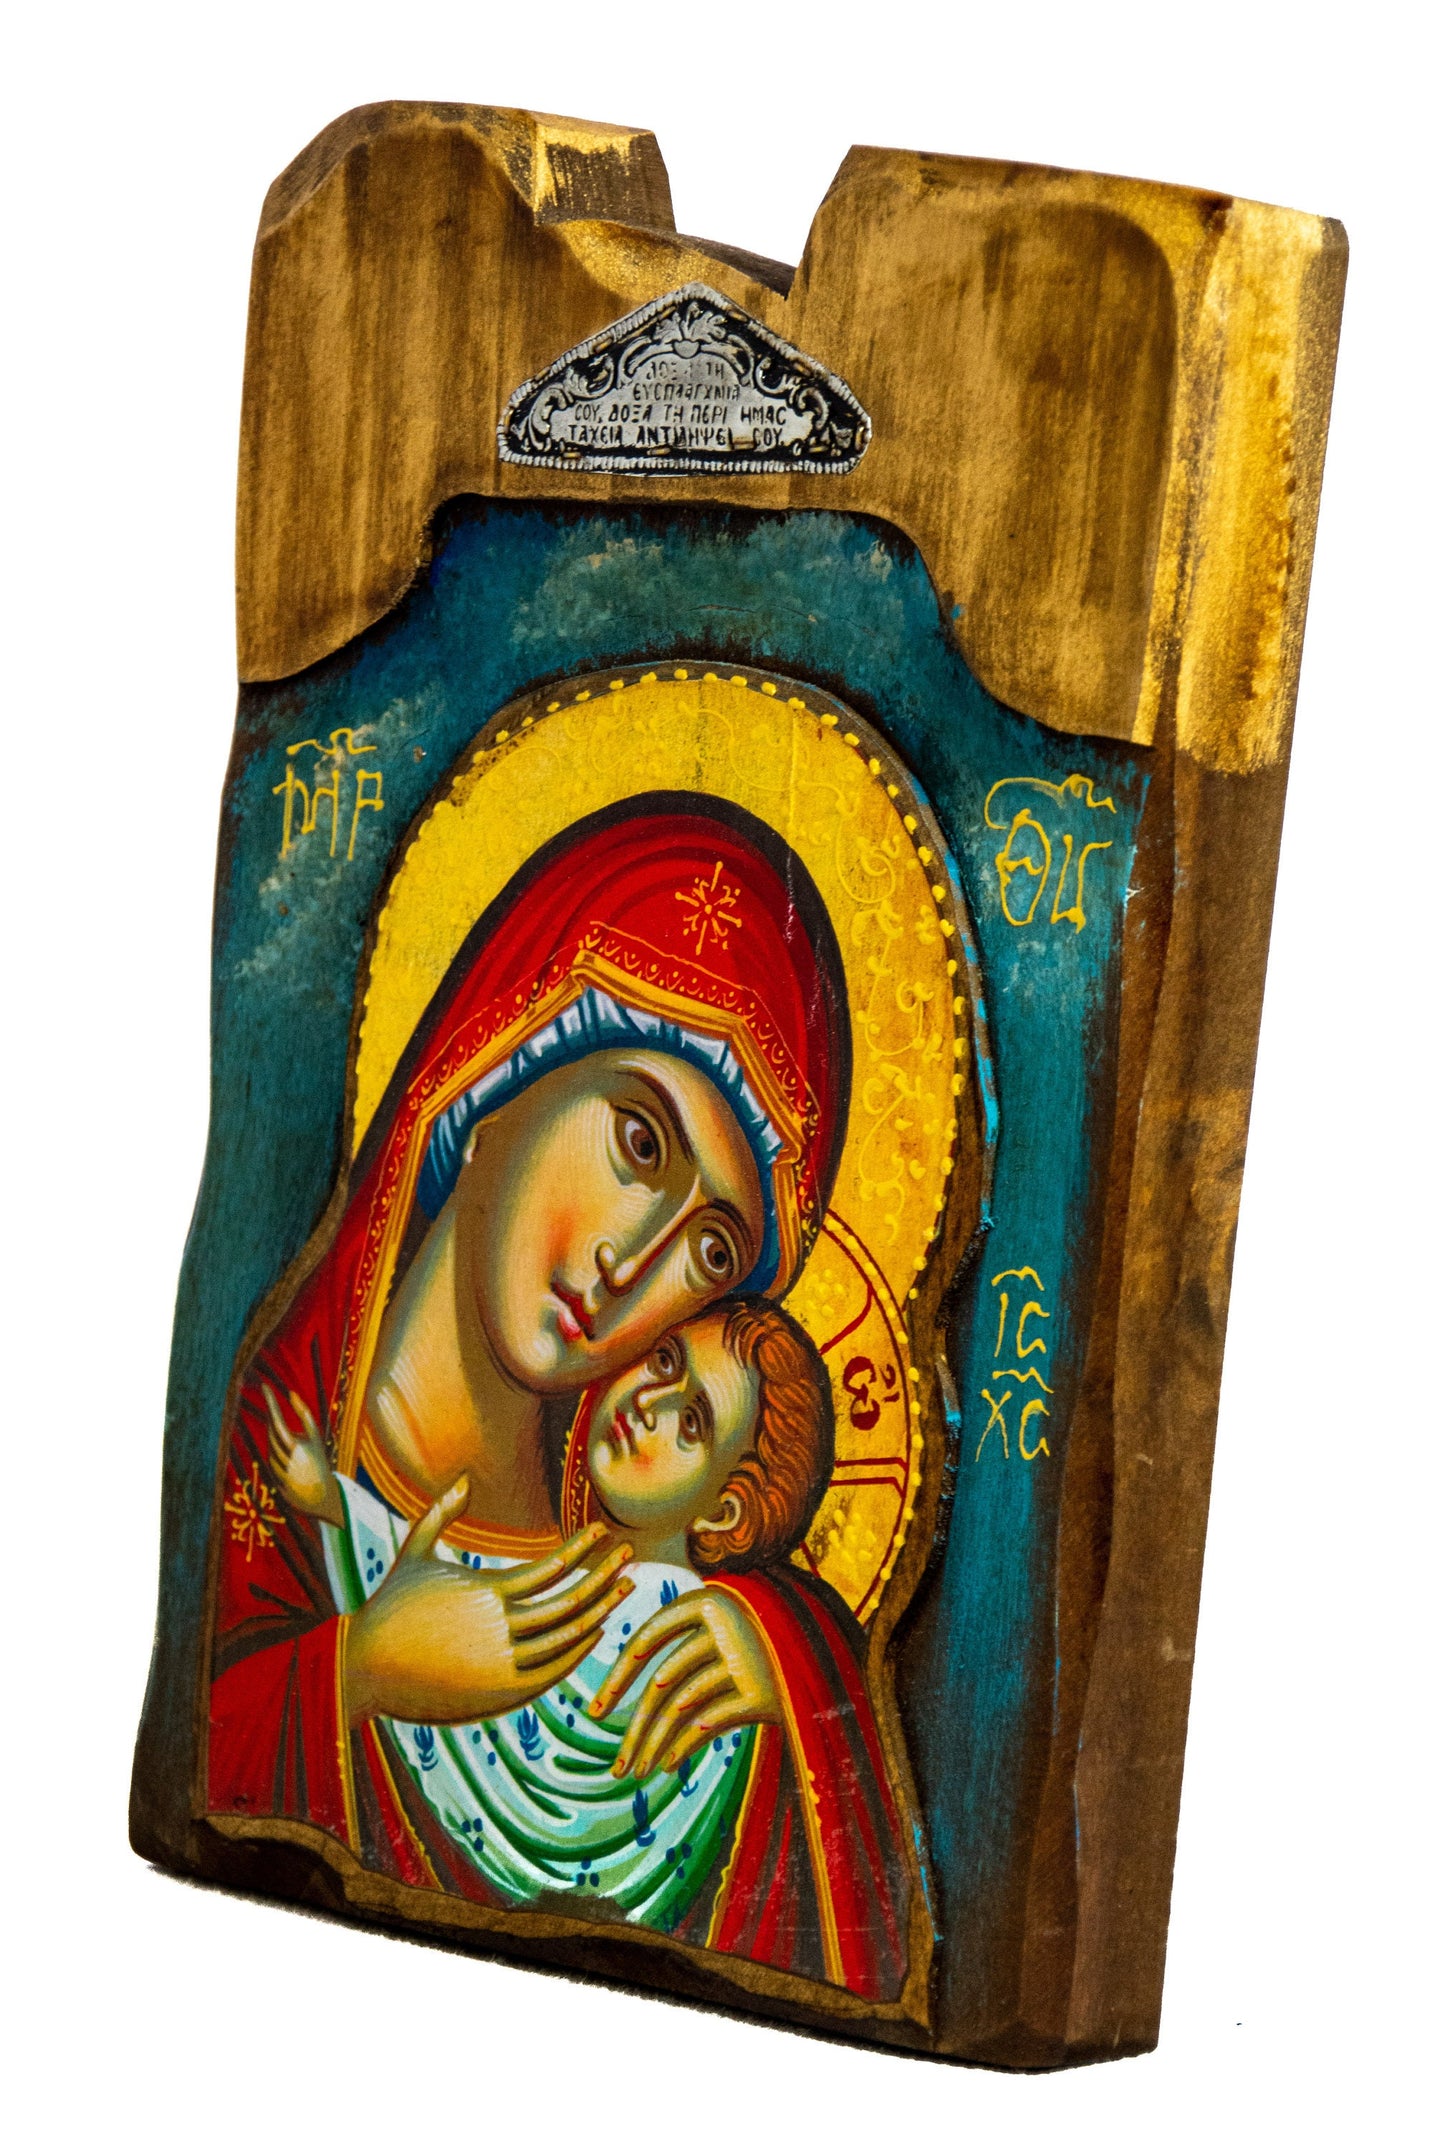 Virgin Mary icon Panagia Glykophilousa, Handmade Greek Orthodox icon of Theotokos Byzantine art wall hanging wood plaque icon religious gift TheHolyArt